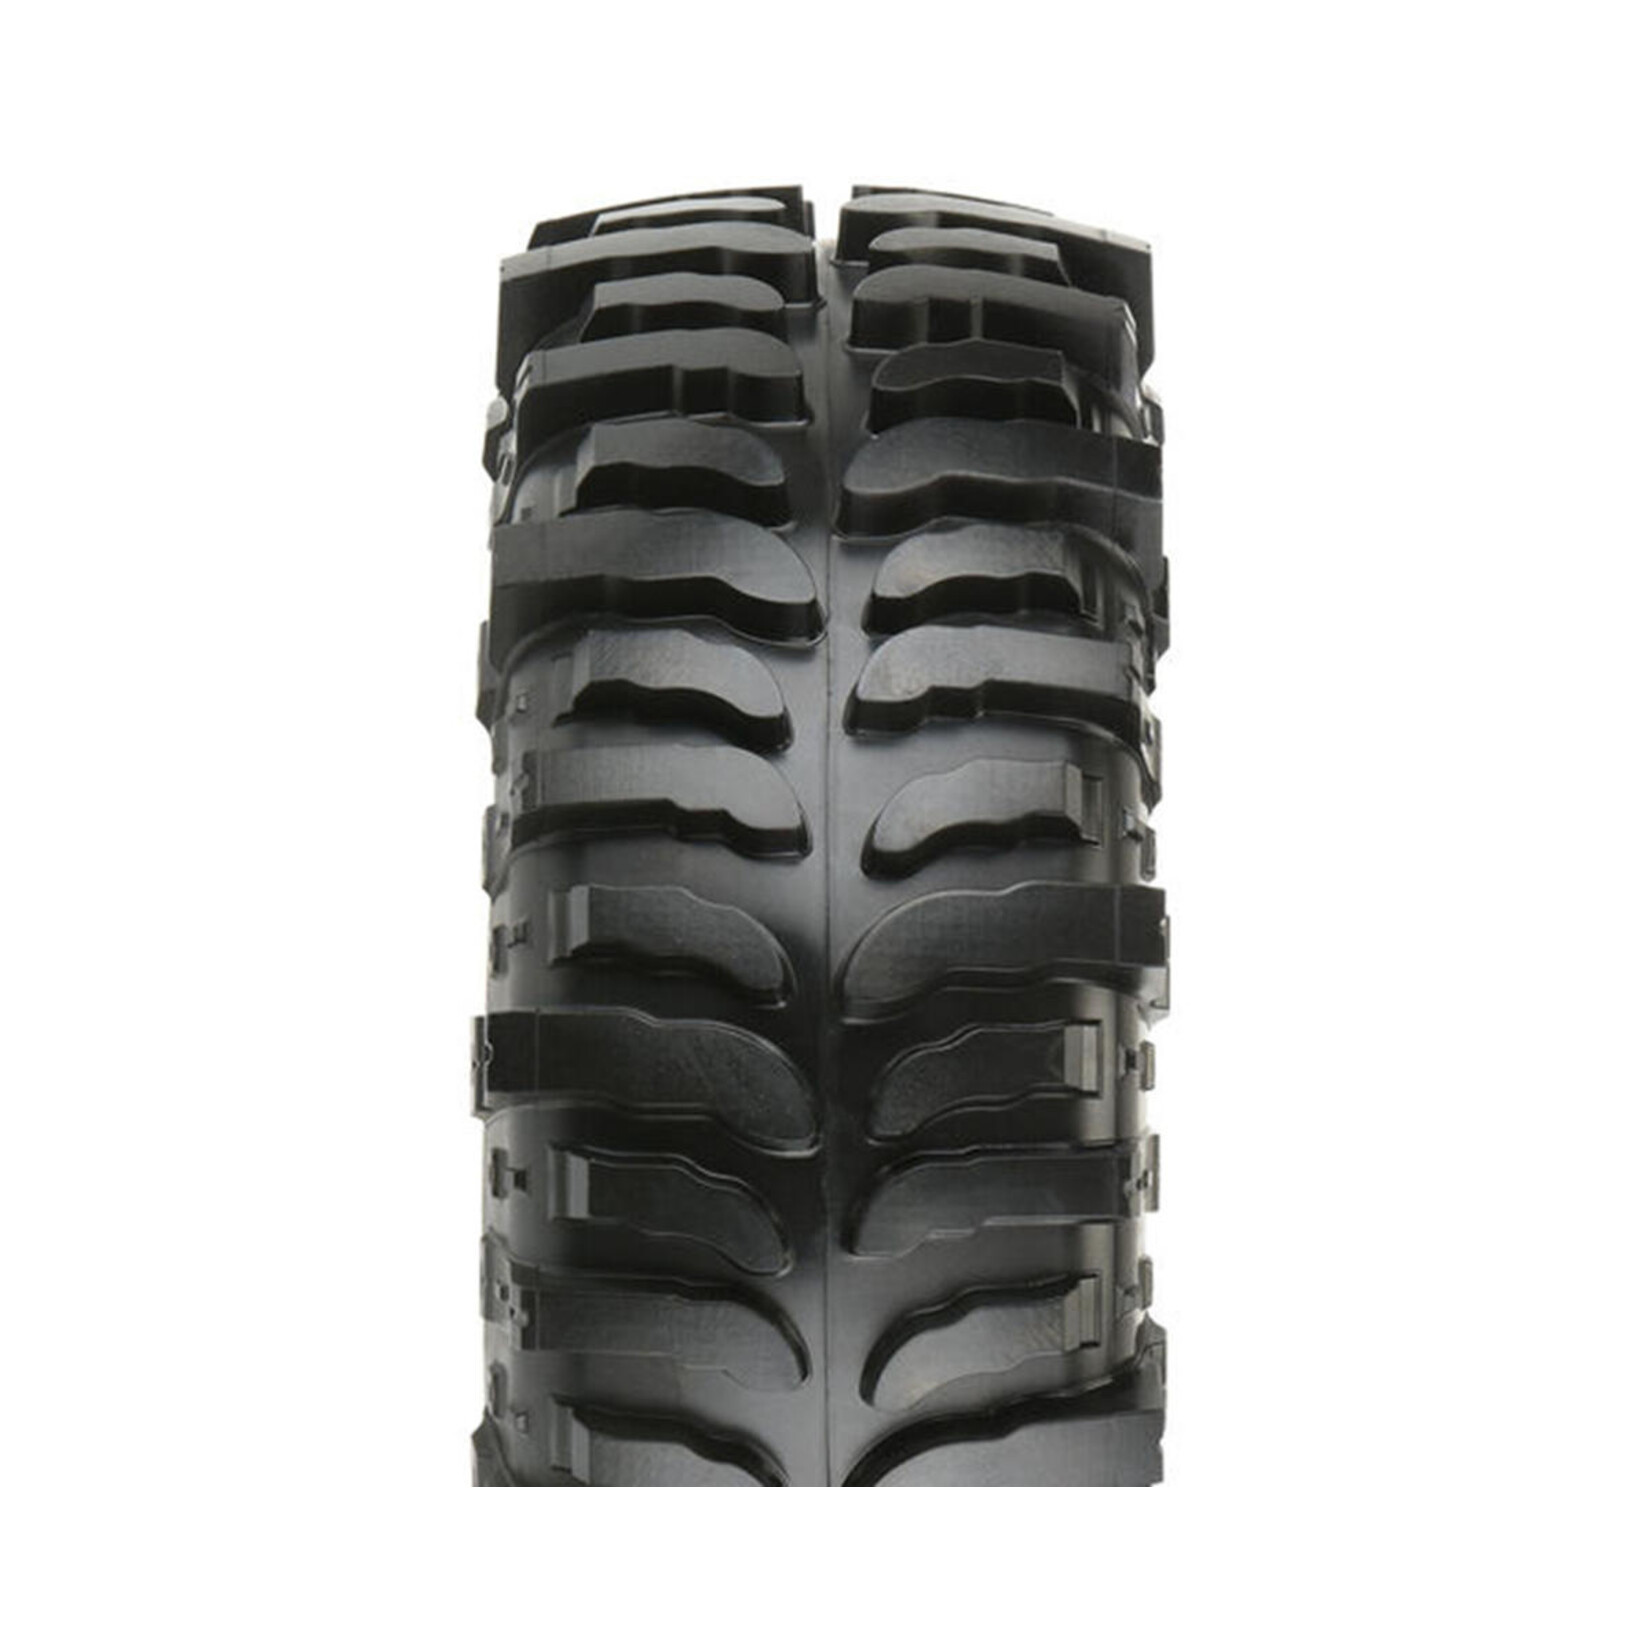 Pro-Line Pro-Line Interco Bogger 1.9" Rock Crawler Tires w/Memory Foam (2) (G8) #10133-14